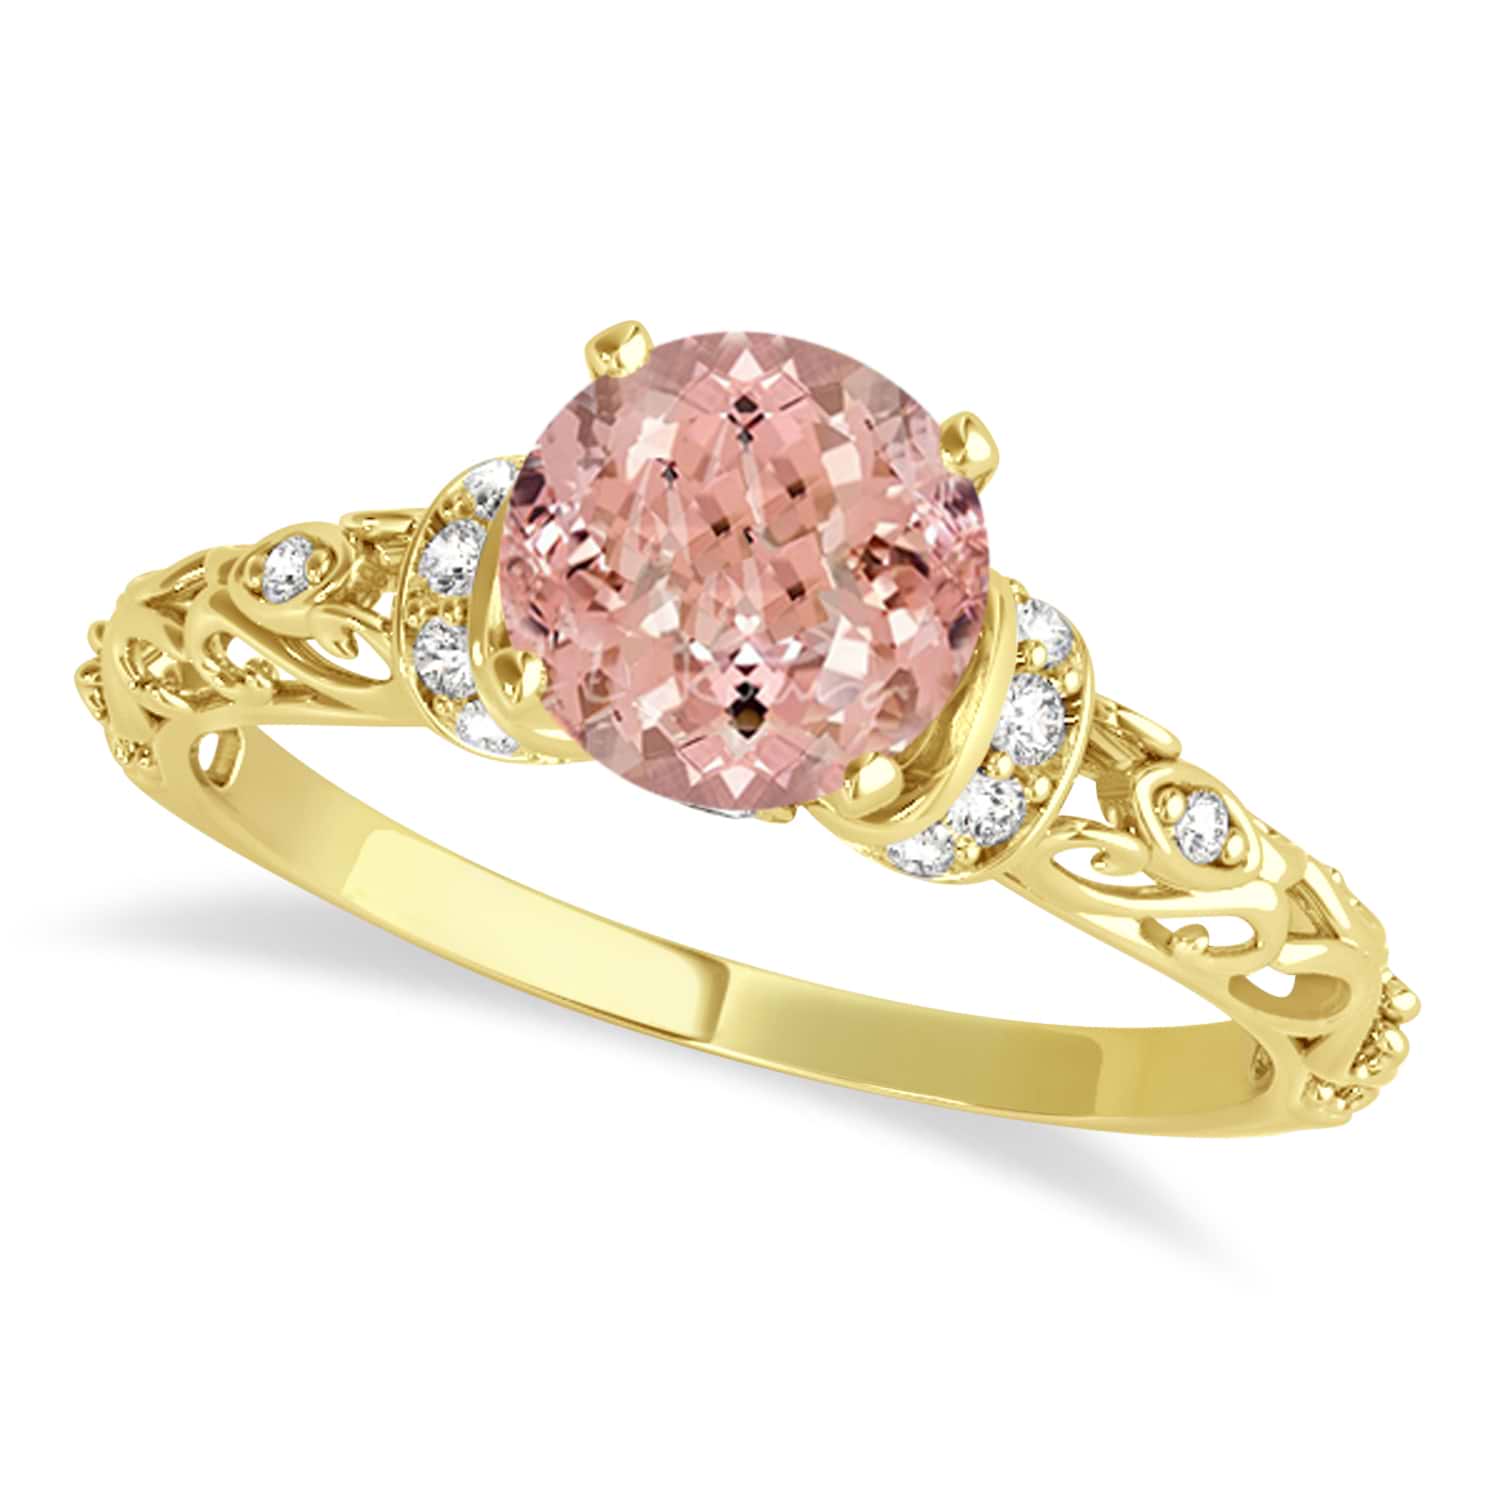 Morganite Diamond Antique Style Engagement Ring 14k Yellow Gold 0.87ct